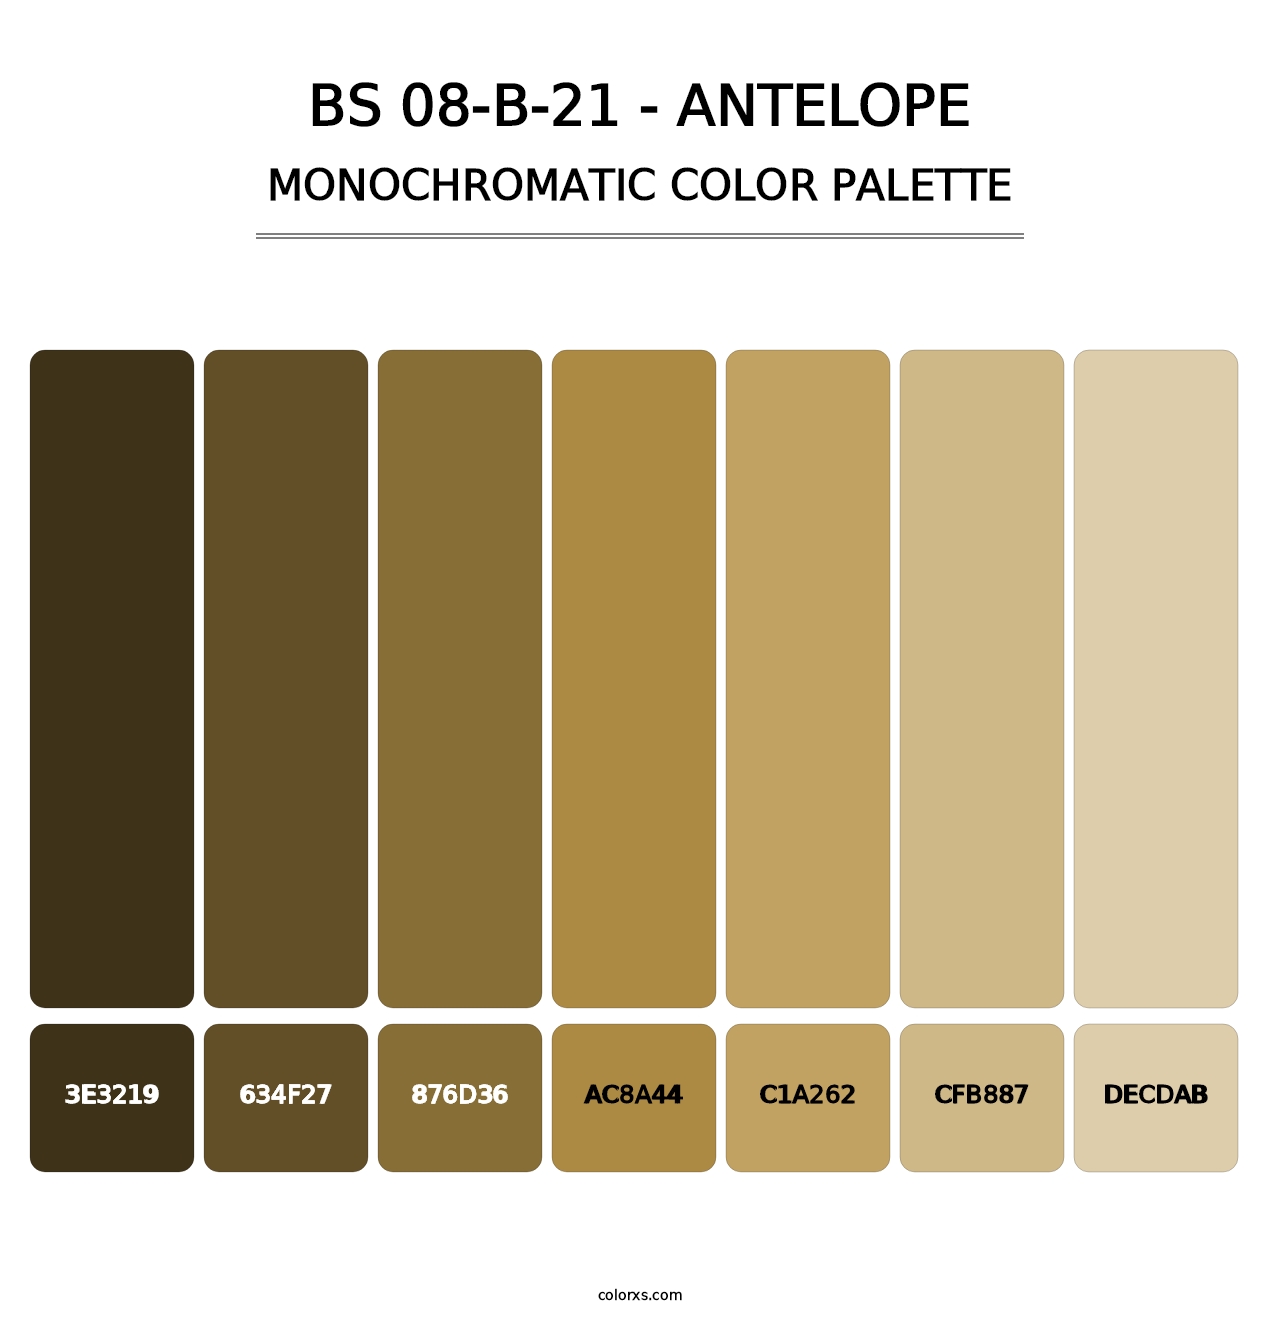 BS 08-B-21 - Antelope - Monochromatic Color Palette